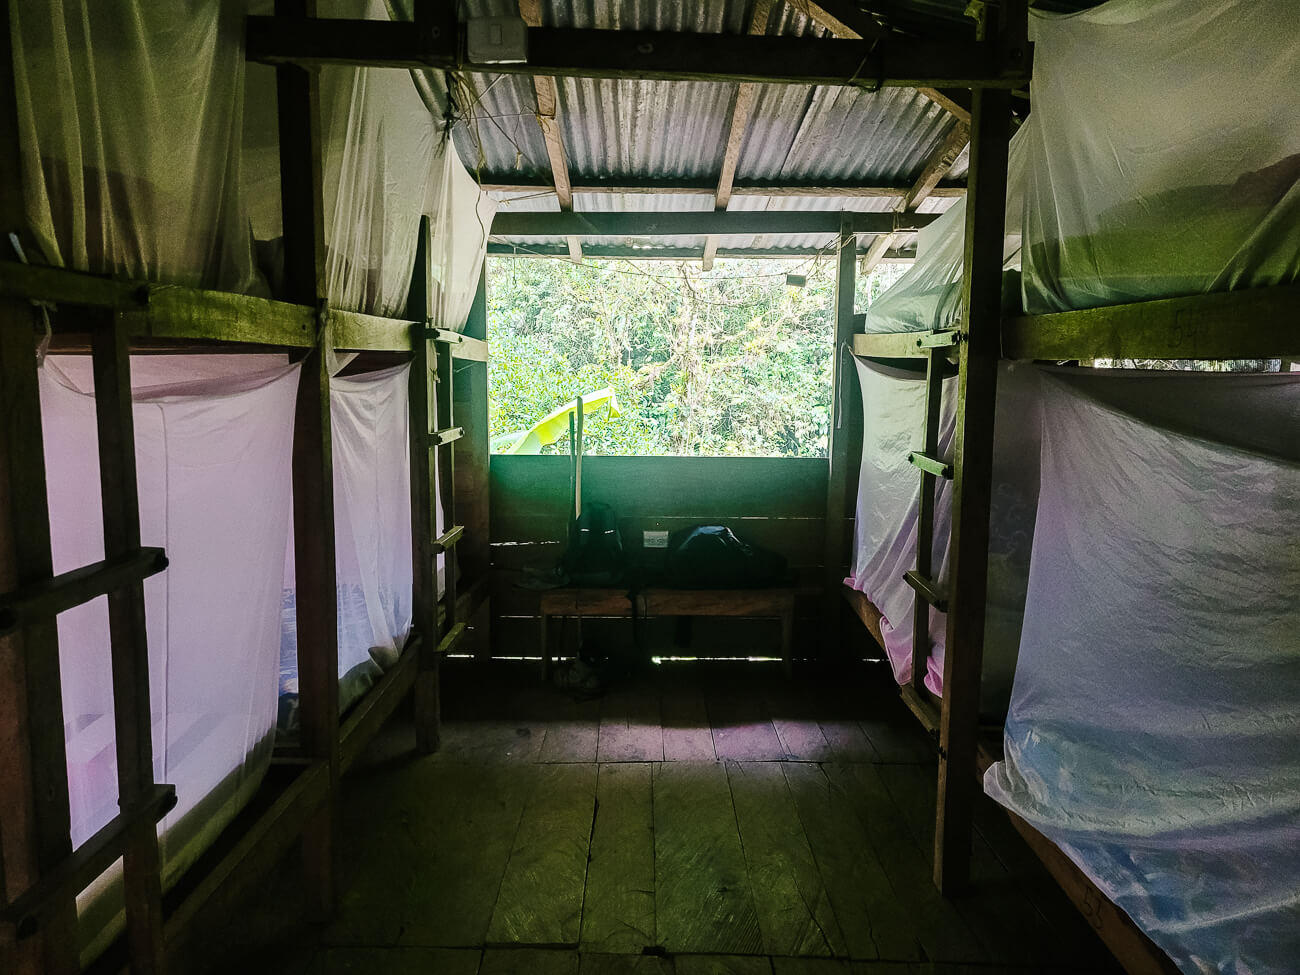 bunkbeds at camp paraiso, during Ciudad perdida hike